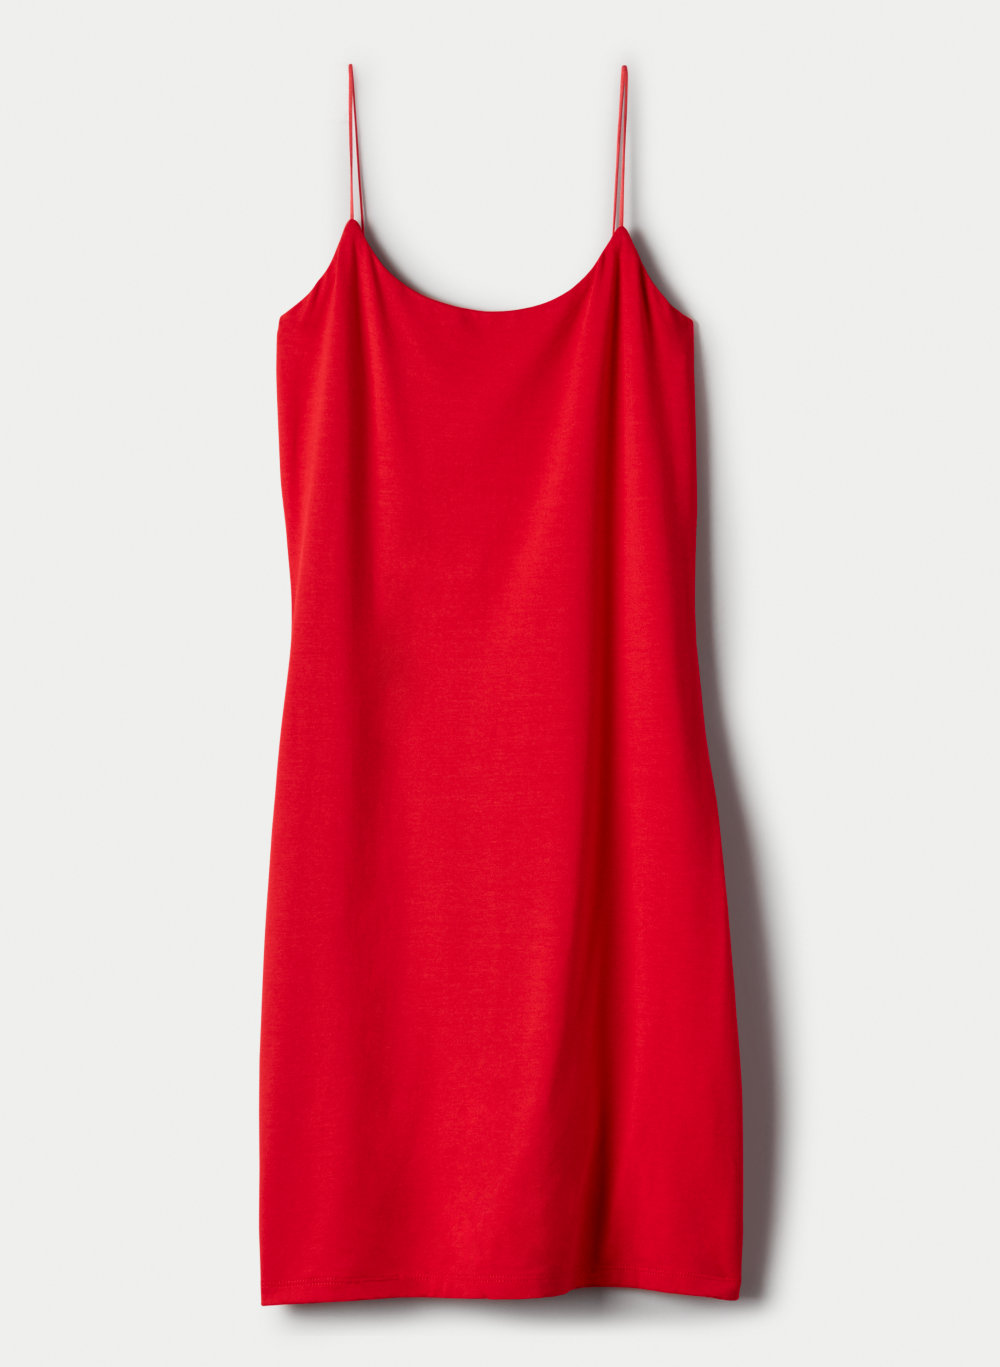 red dress aritzia